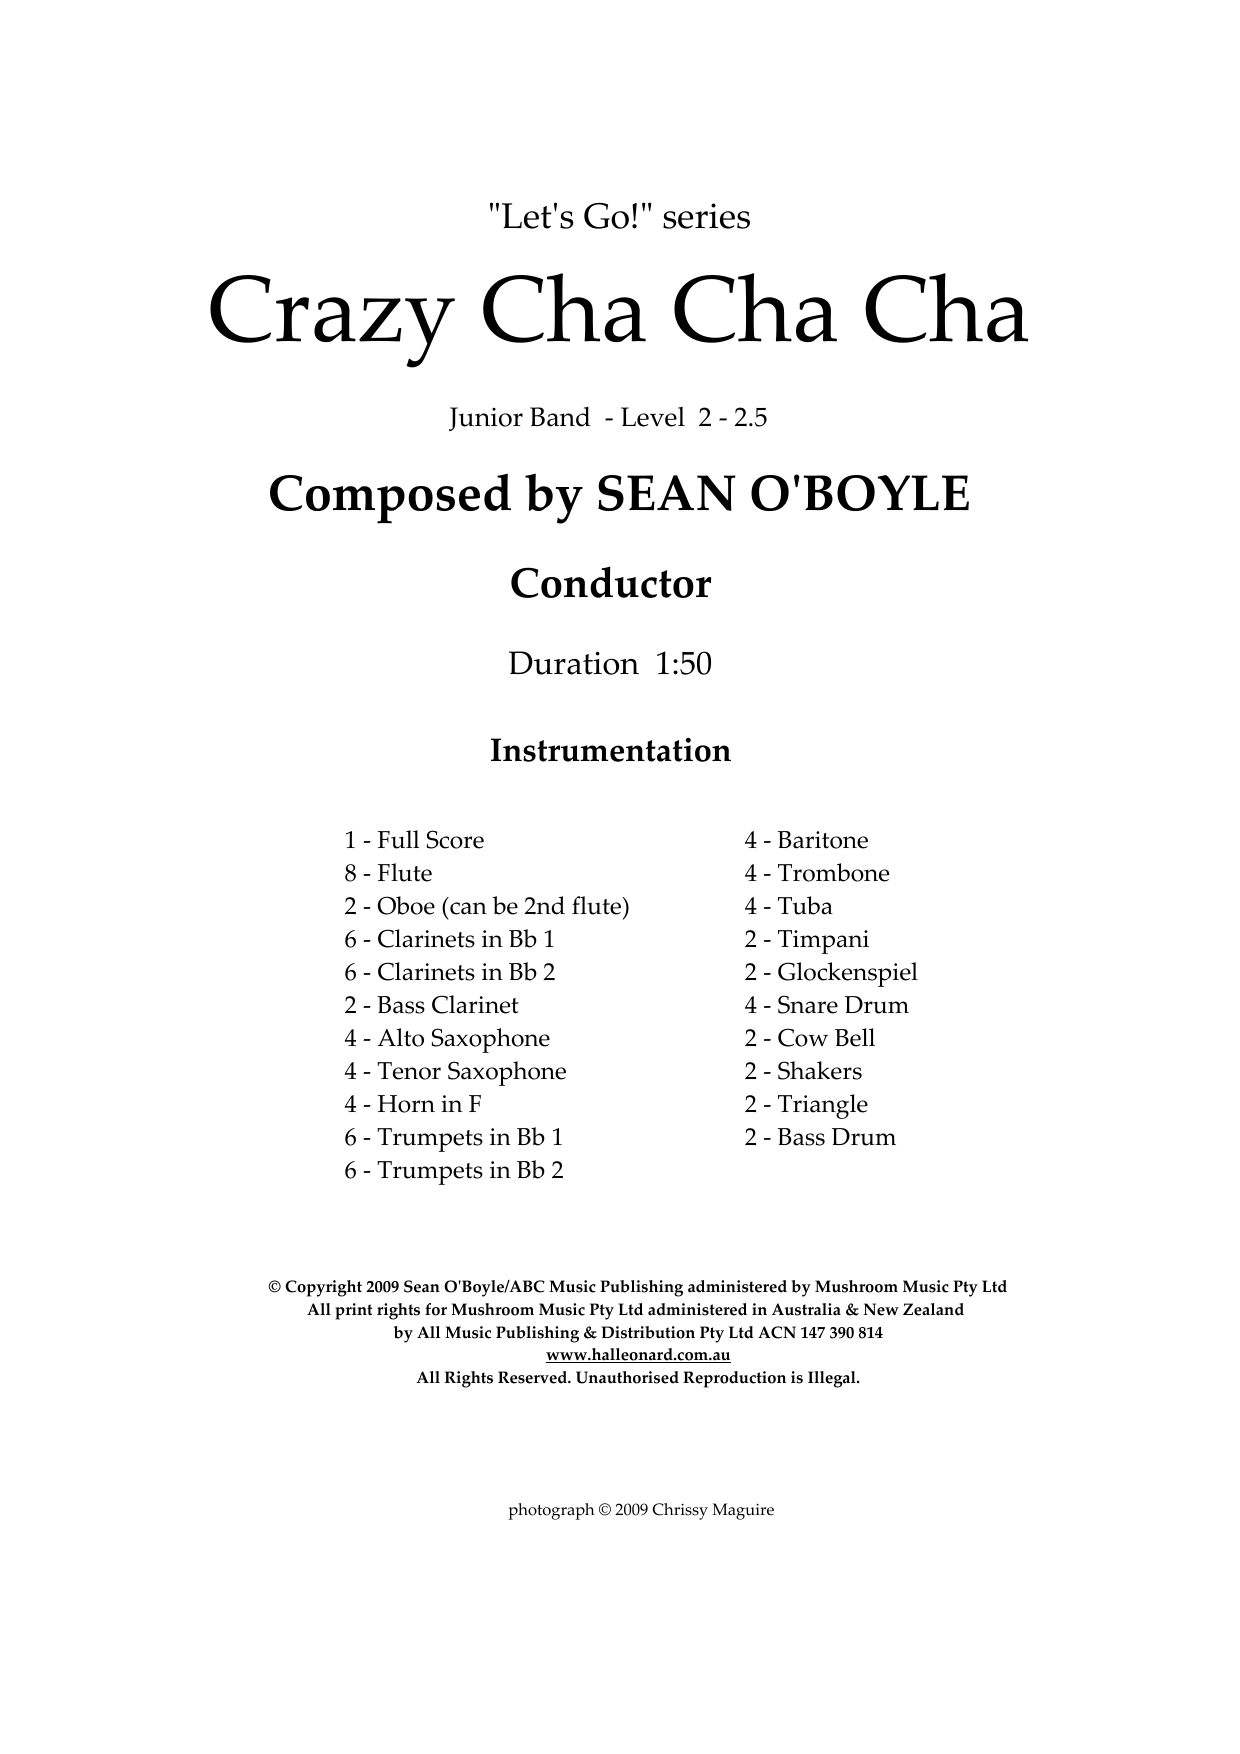 Download Sean O'Boyle Crazy Cha Cha Cha - Score Sheet Music